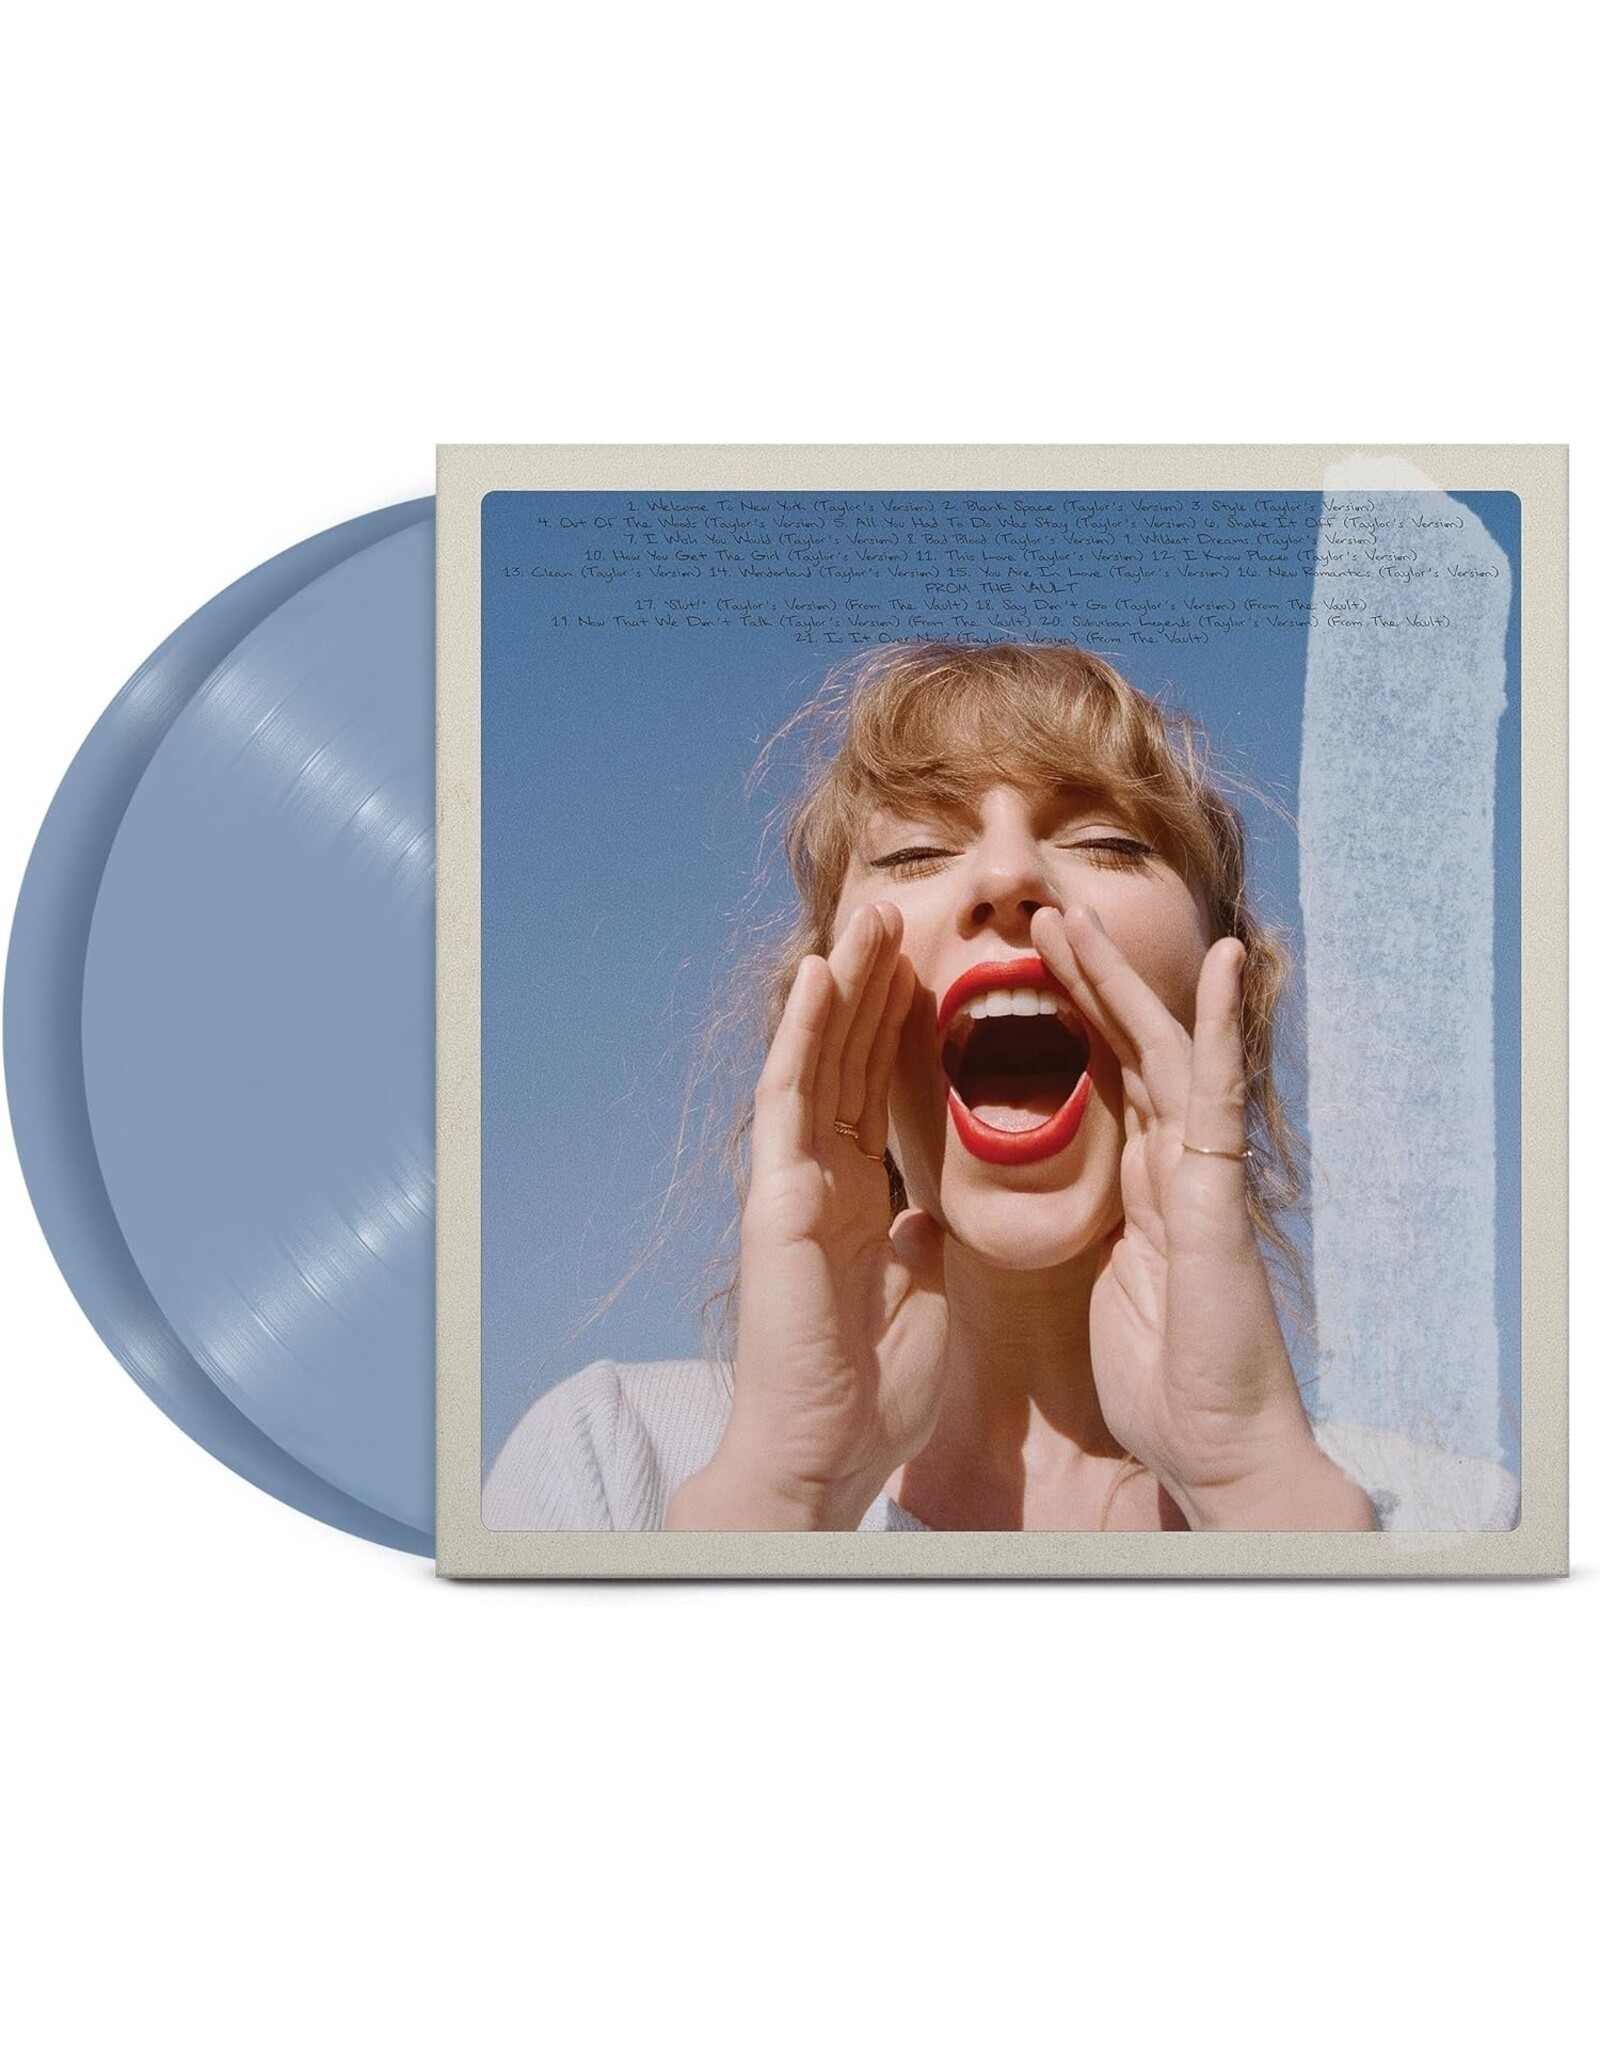 Taylor Swift - 1989 (Taylor's Version) [Crystal Skies Blue Vinyl]